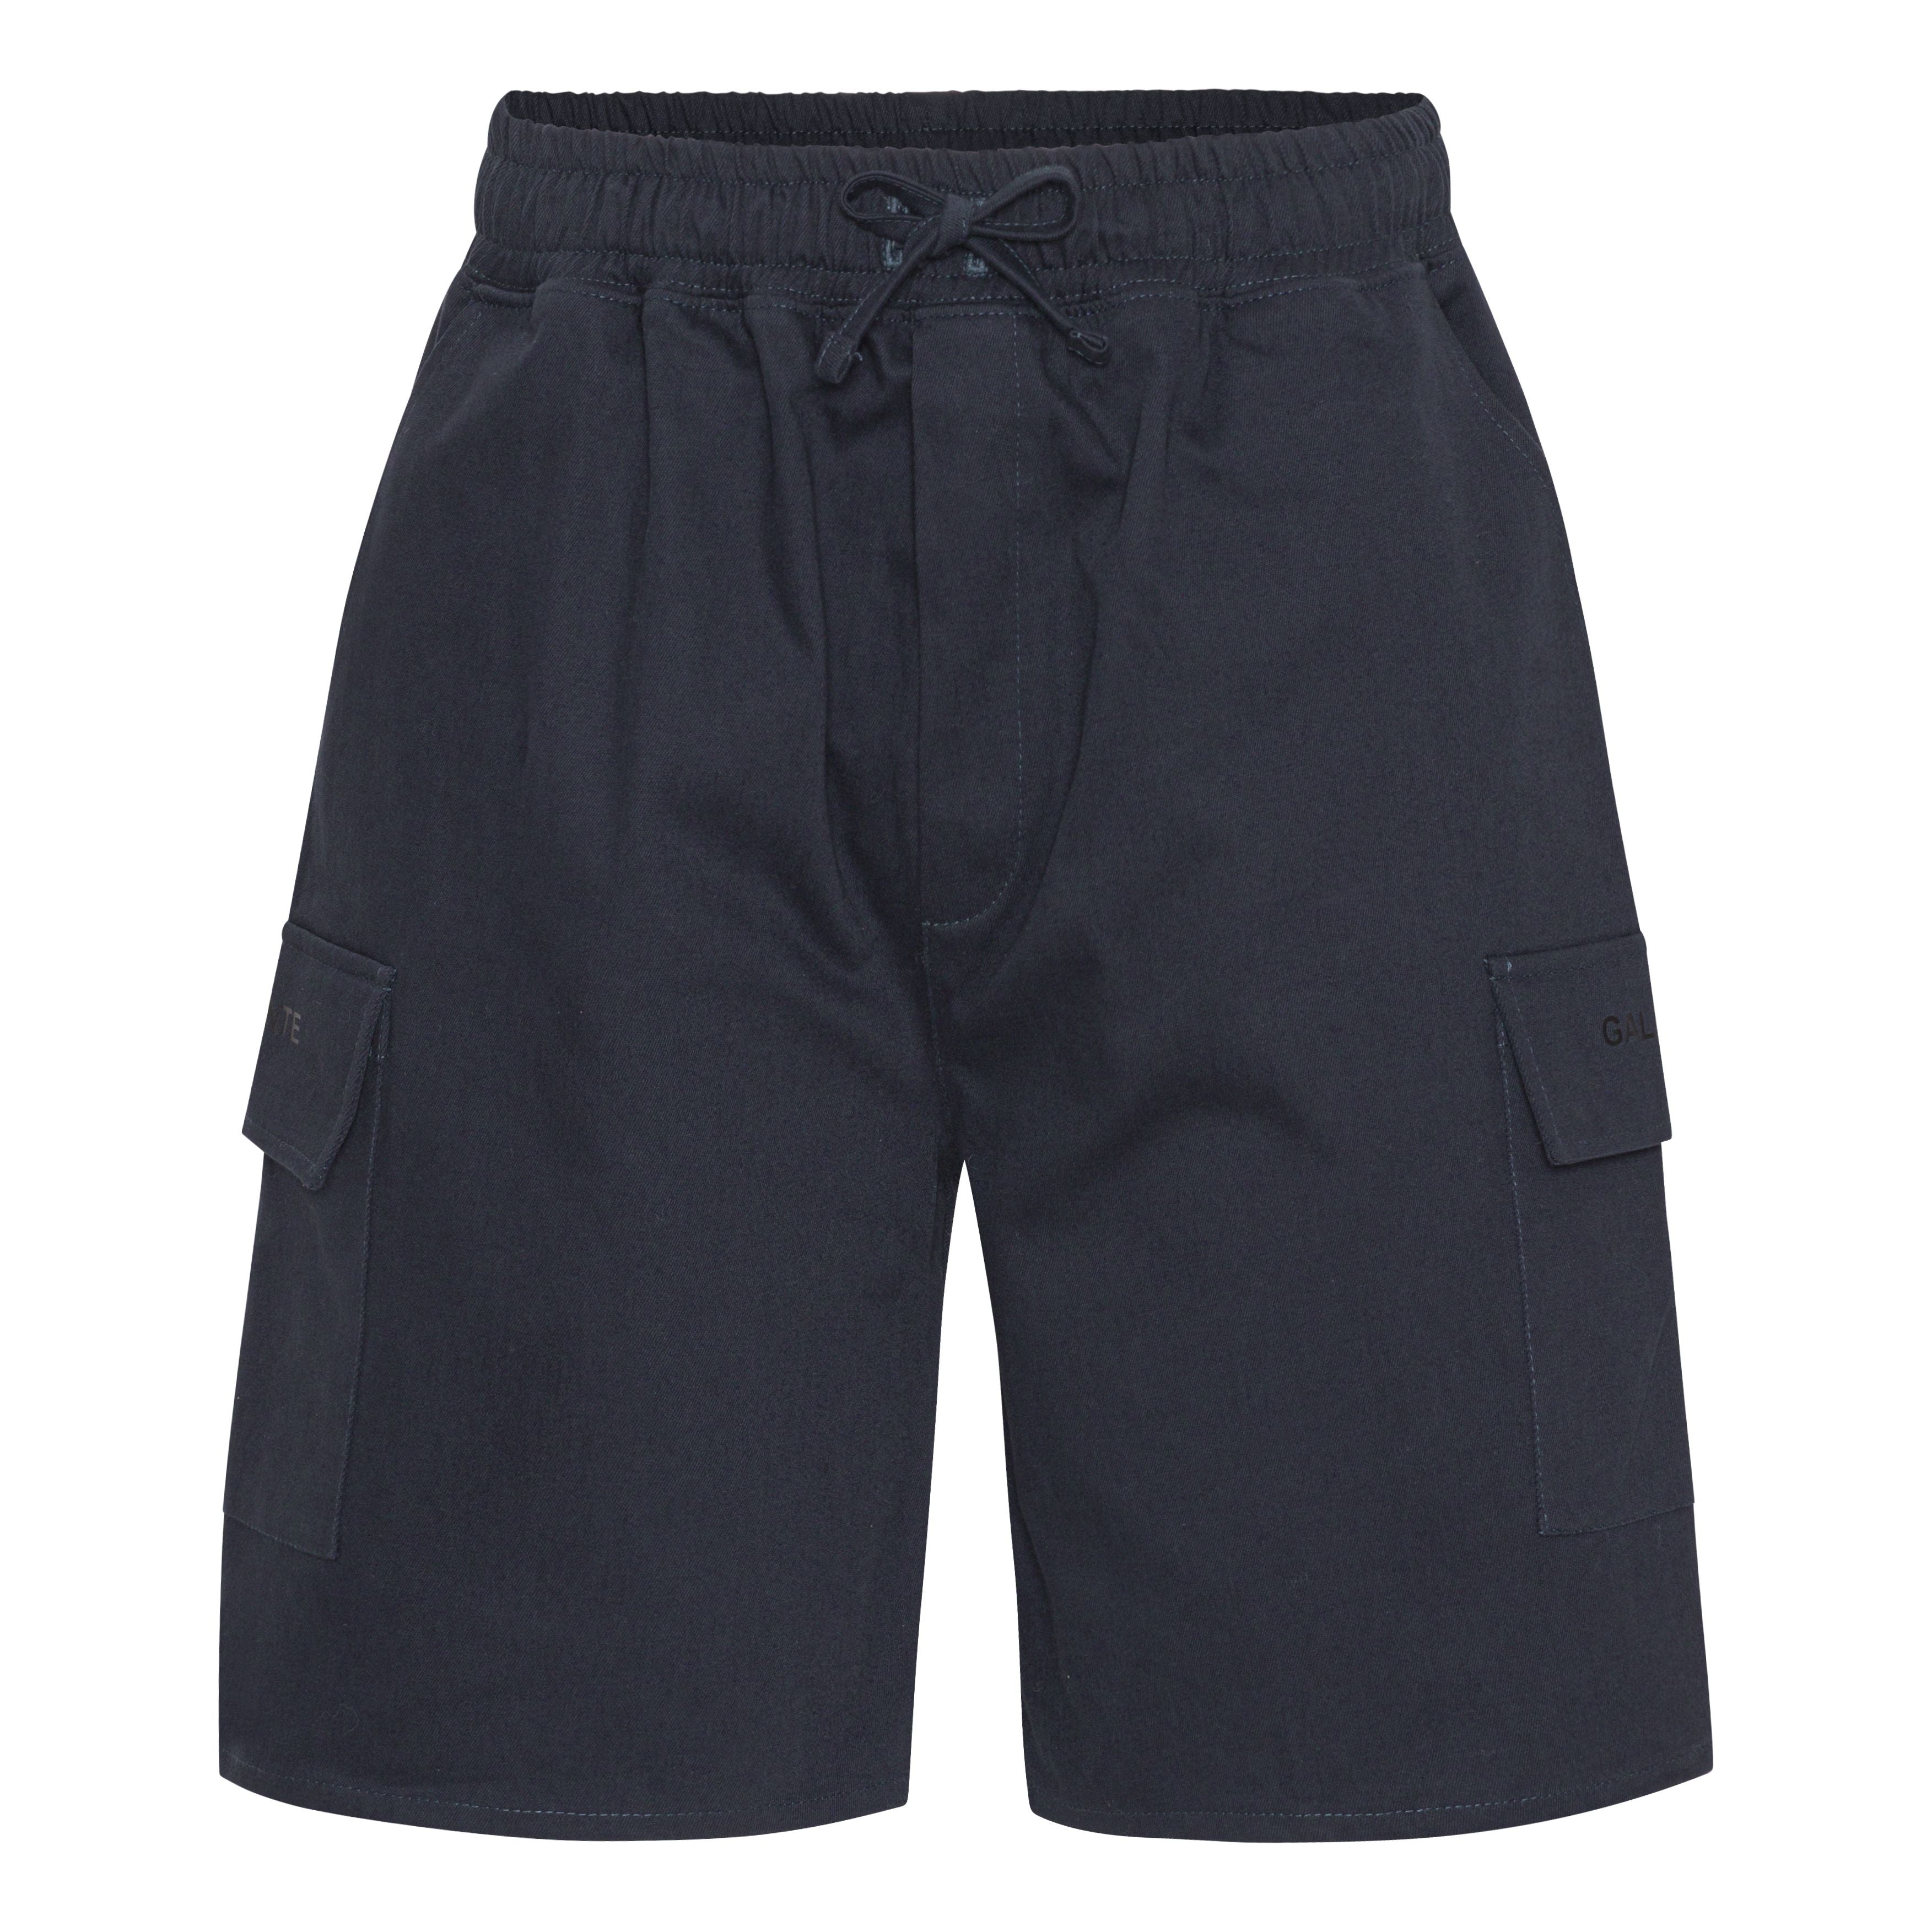 Navy blue cargo shorts